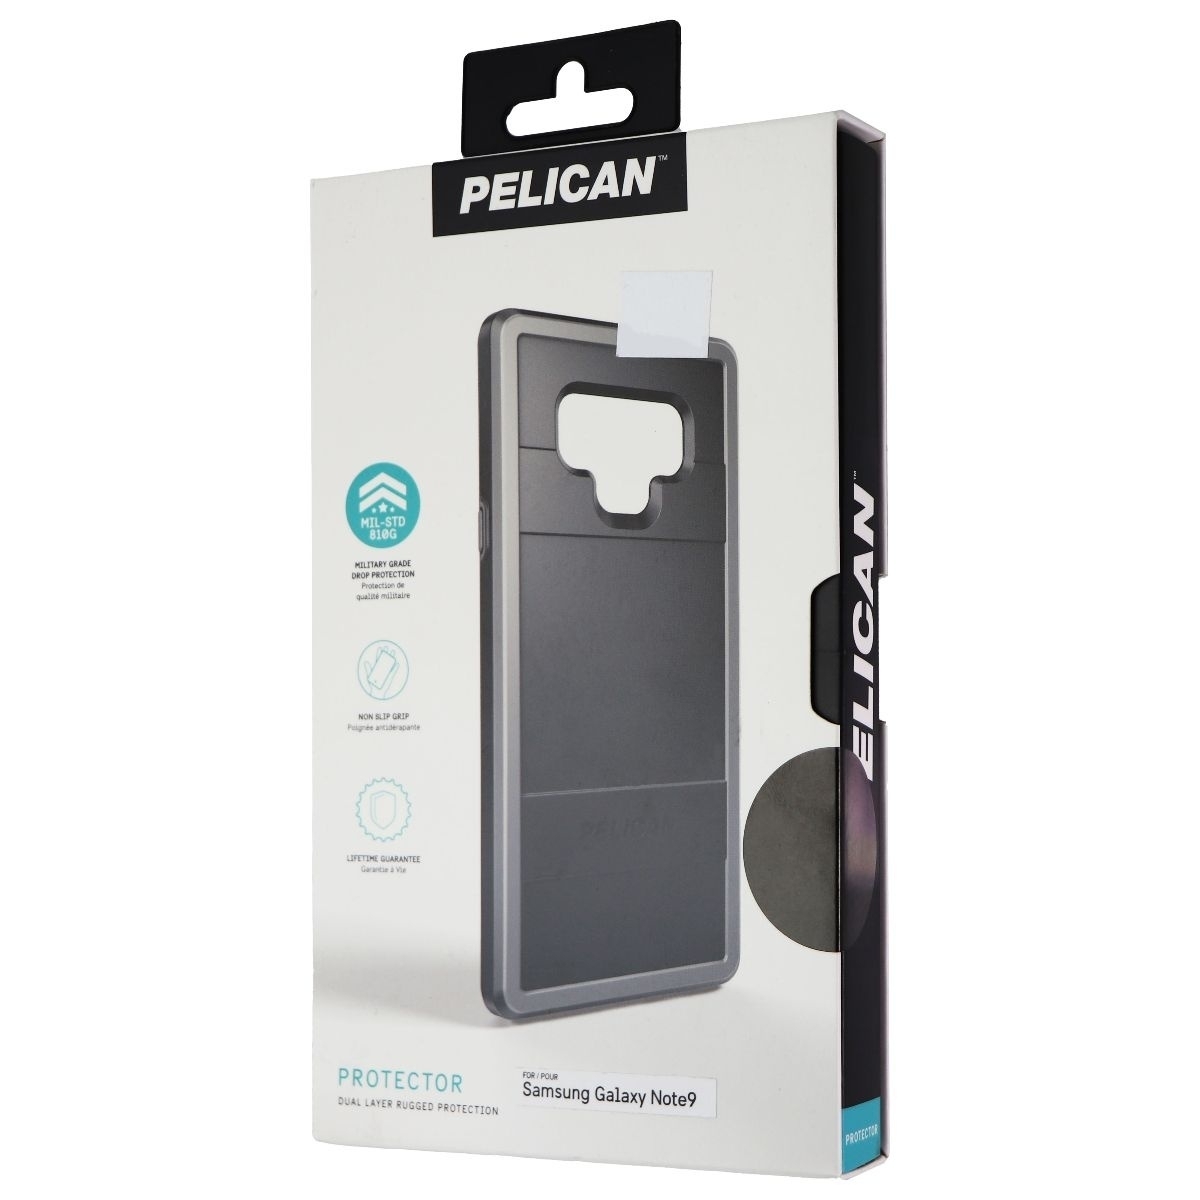 Pelican Protector Series Hard Case For Samsung Galaxy Note9 - Black/ Gray